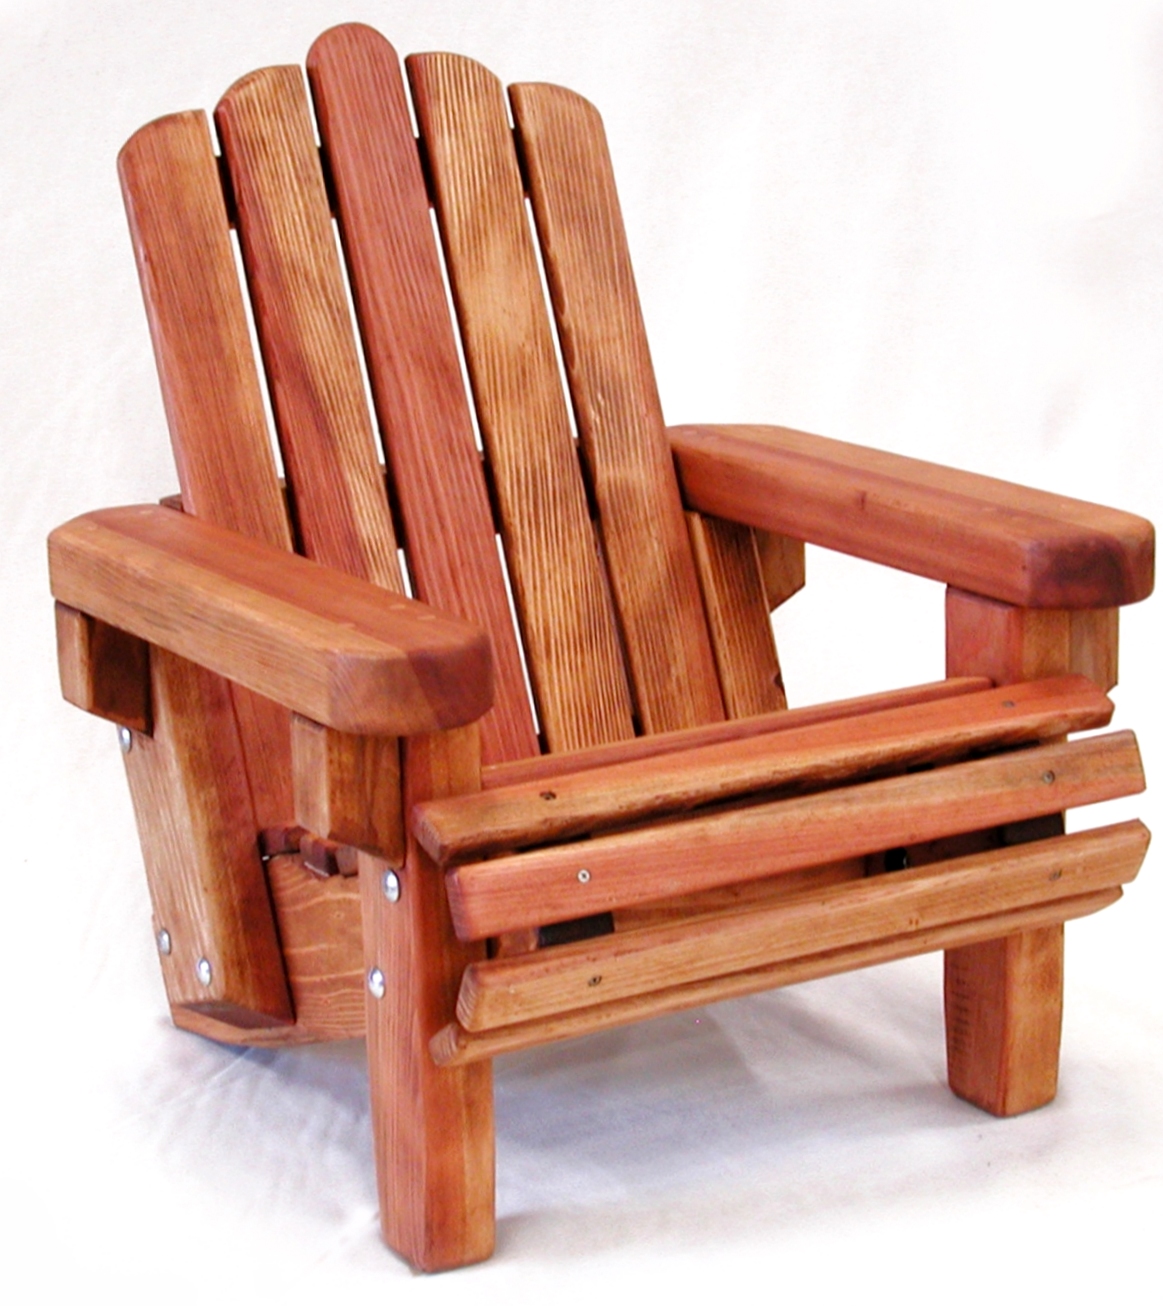 Kids Wooden Adirondack Chair, Outdoor Wooden Chairs